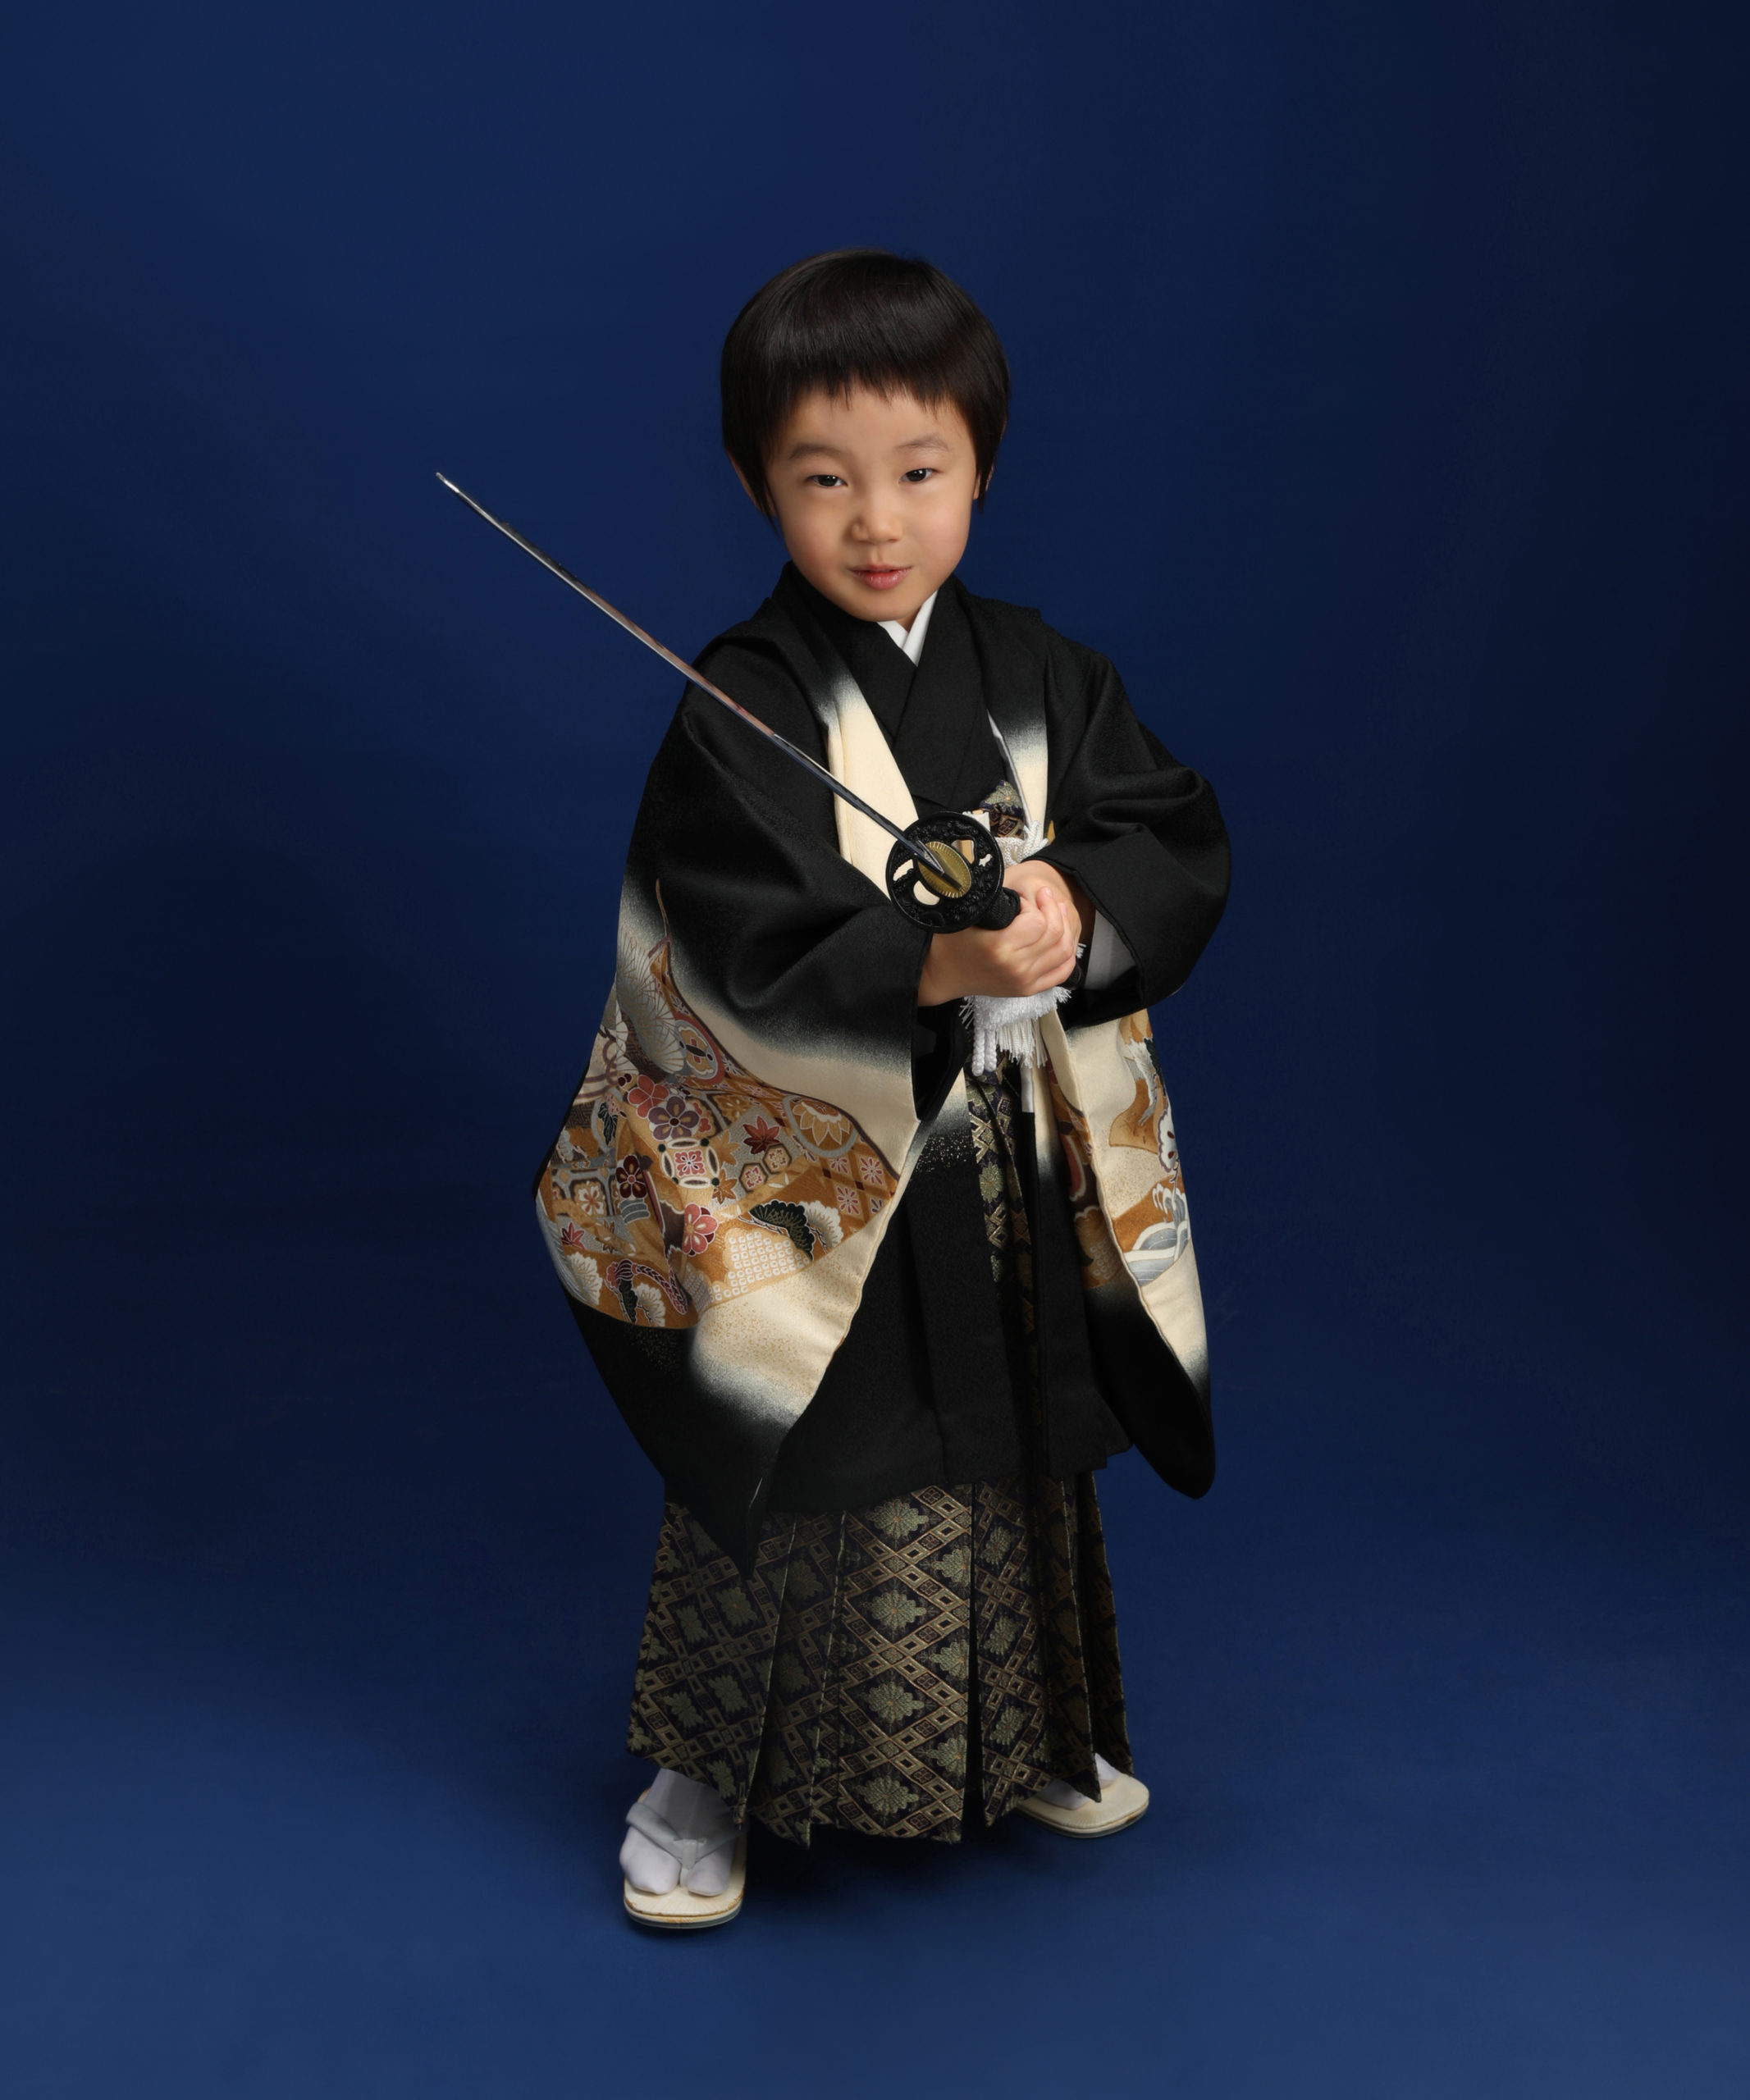 七五三記念写真撮影例(5歳男の子着物)横浜そごう写真館